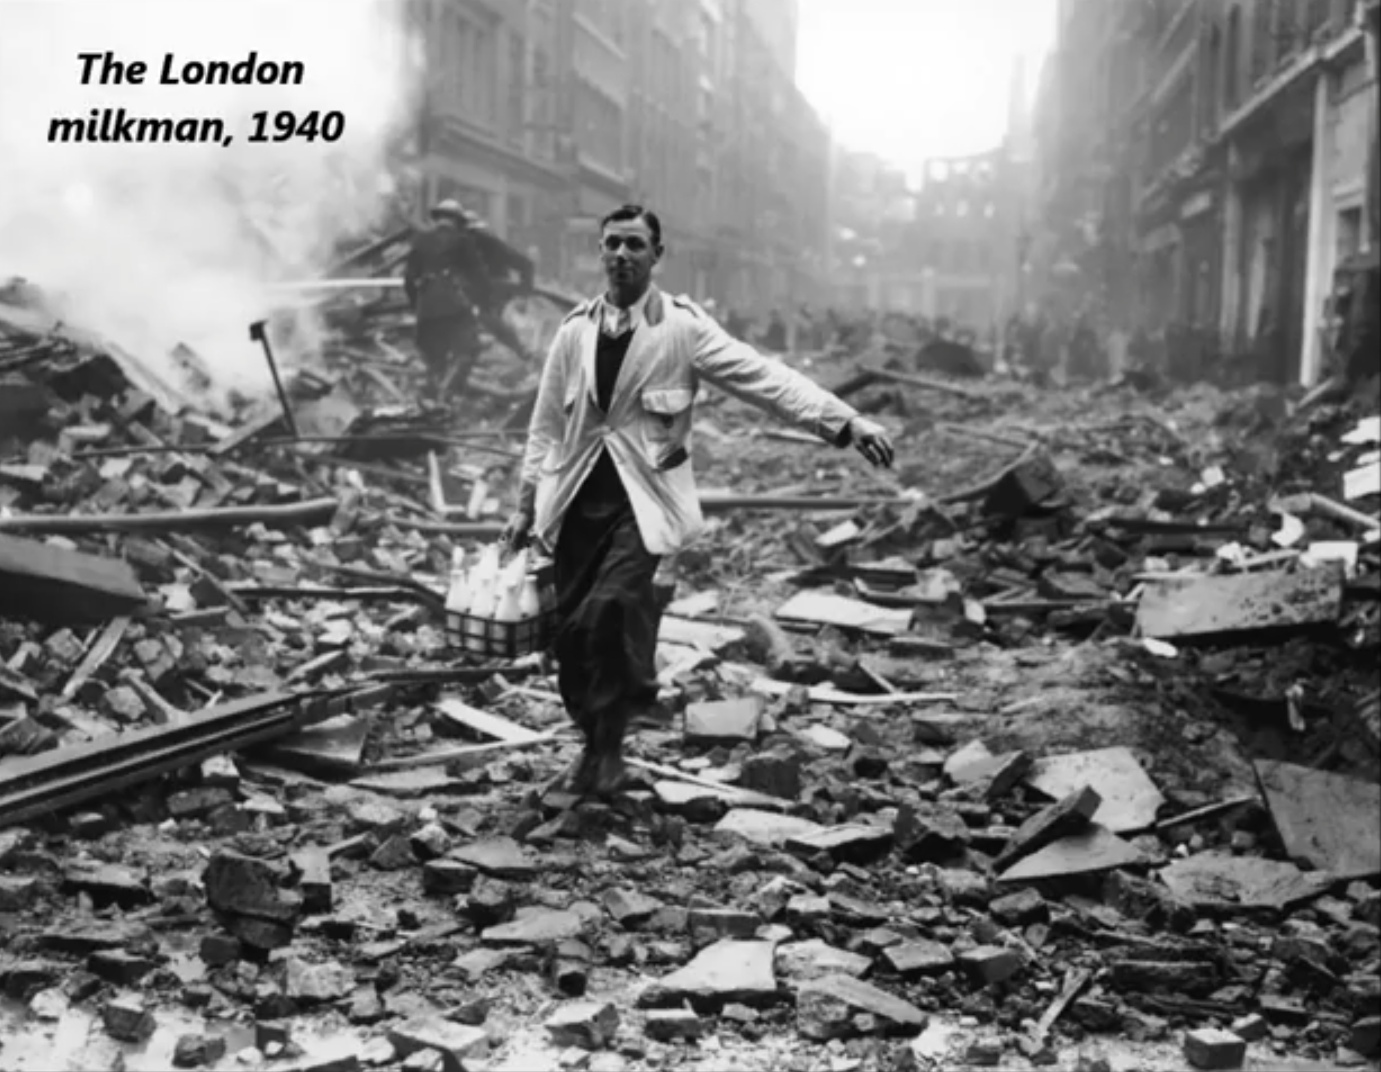 world war 1 after - The London milkman, 1940